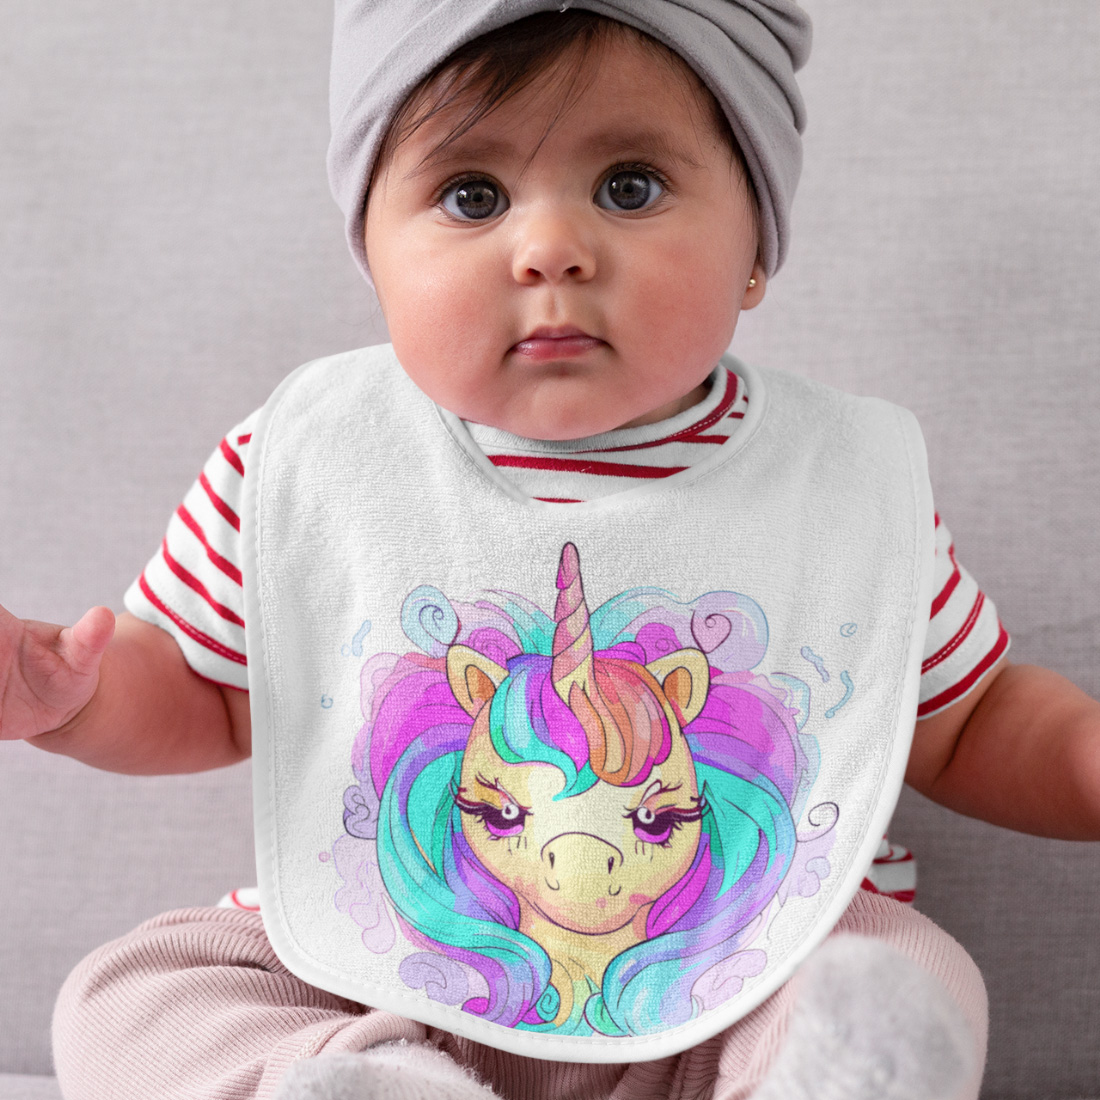 Rainbow Baby Unicorn Parade preview image.